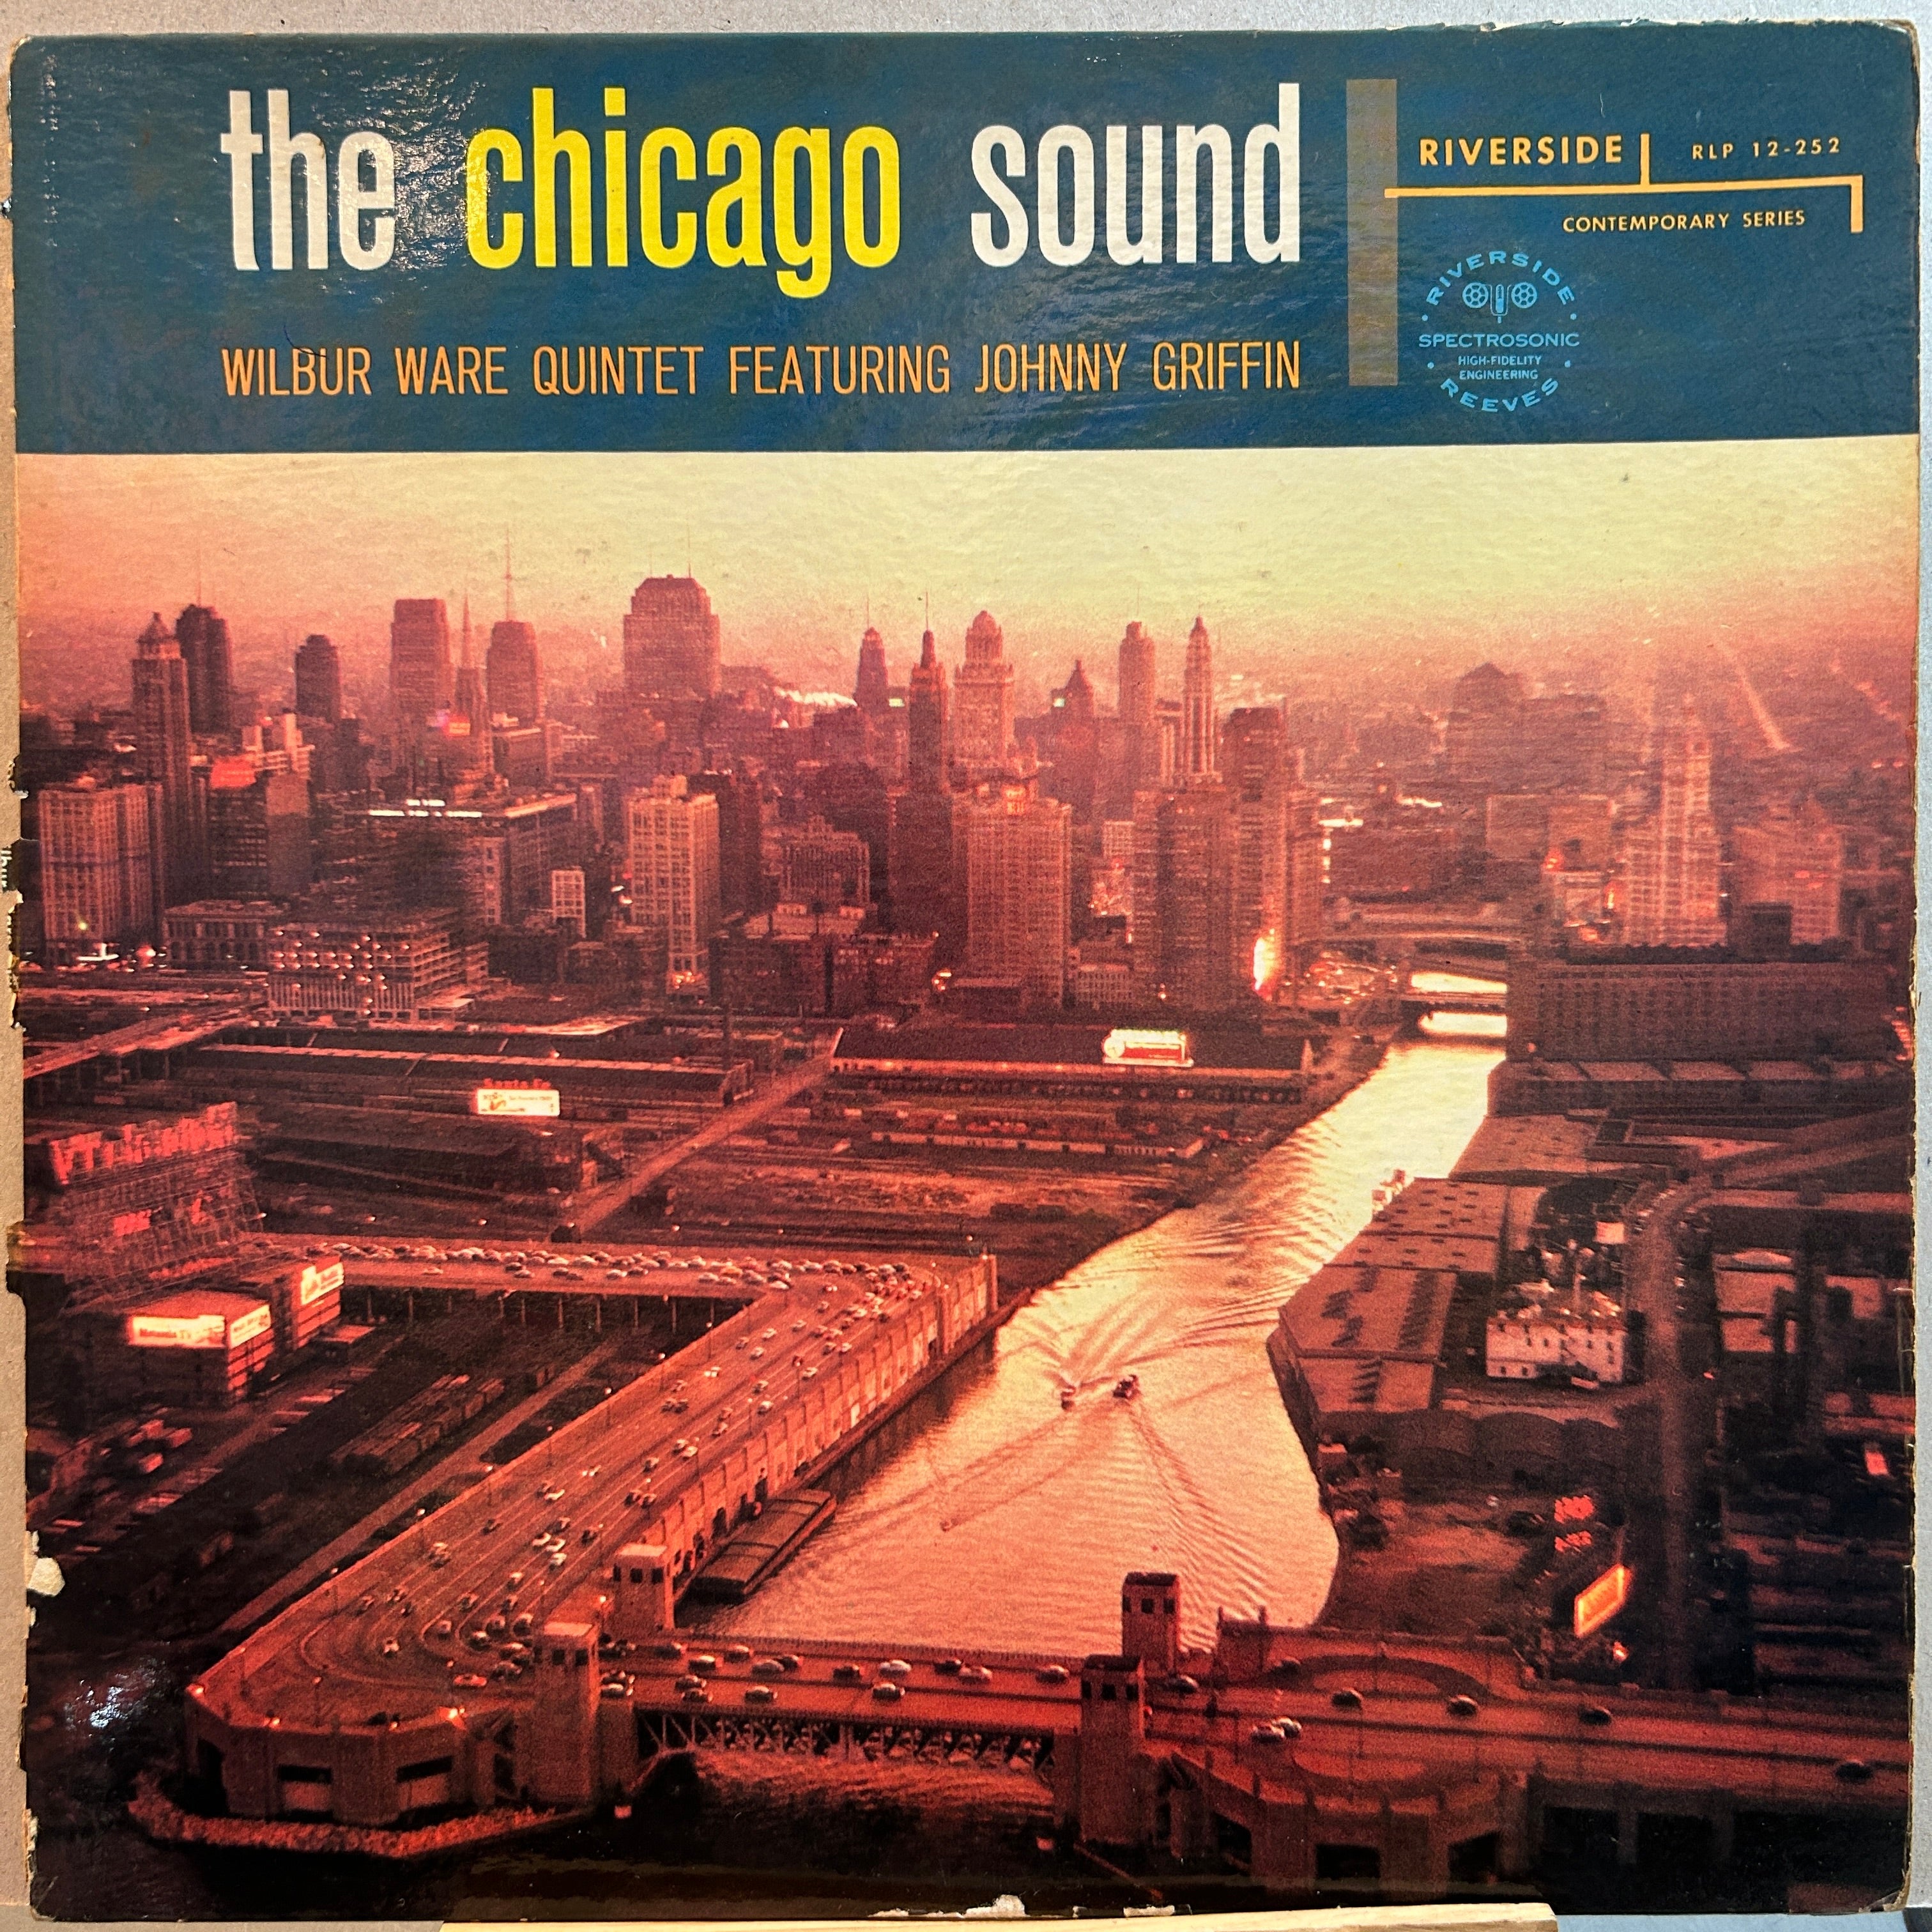 The Chicago Sound